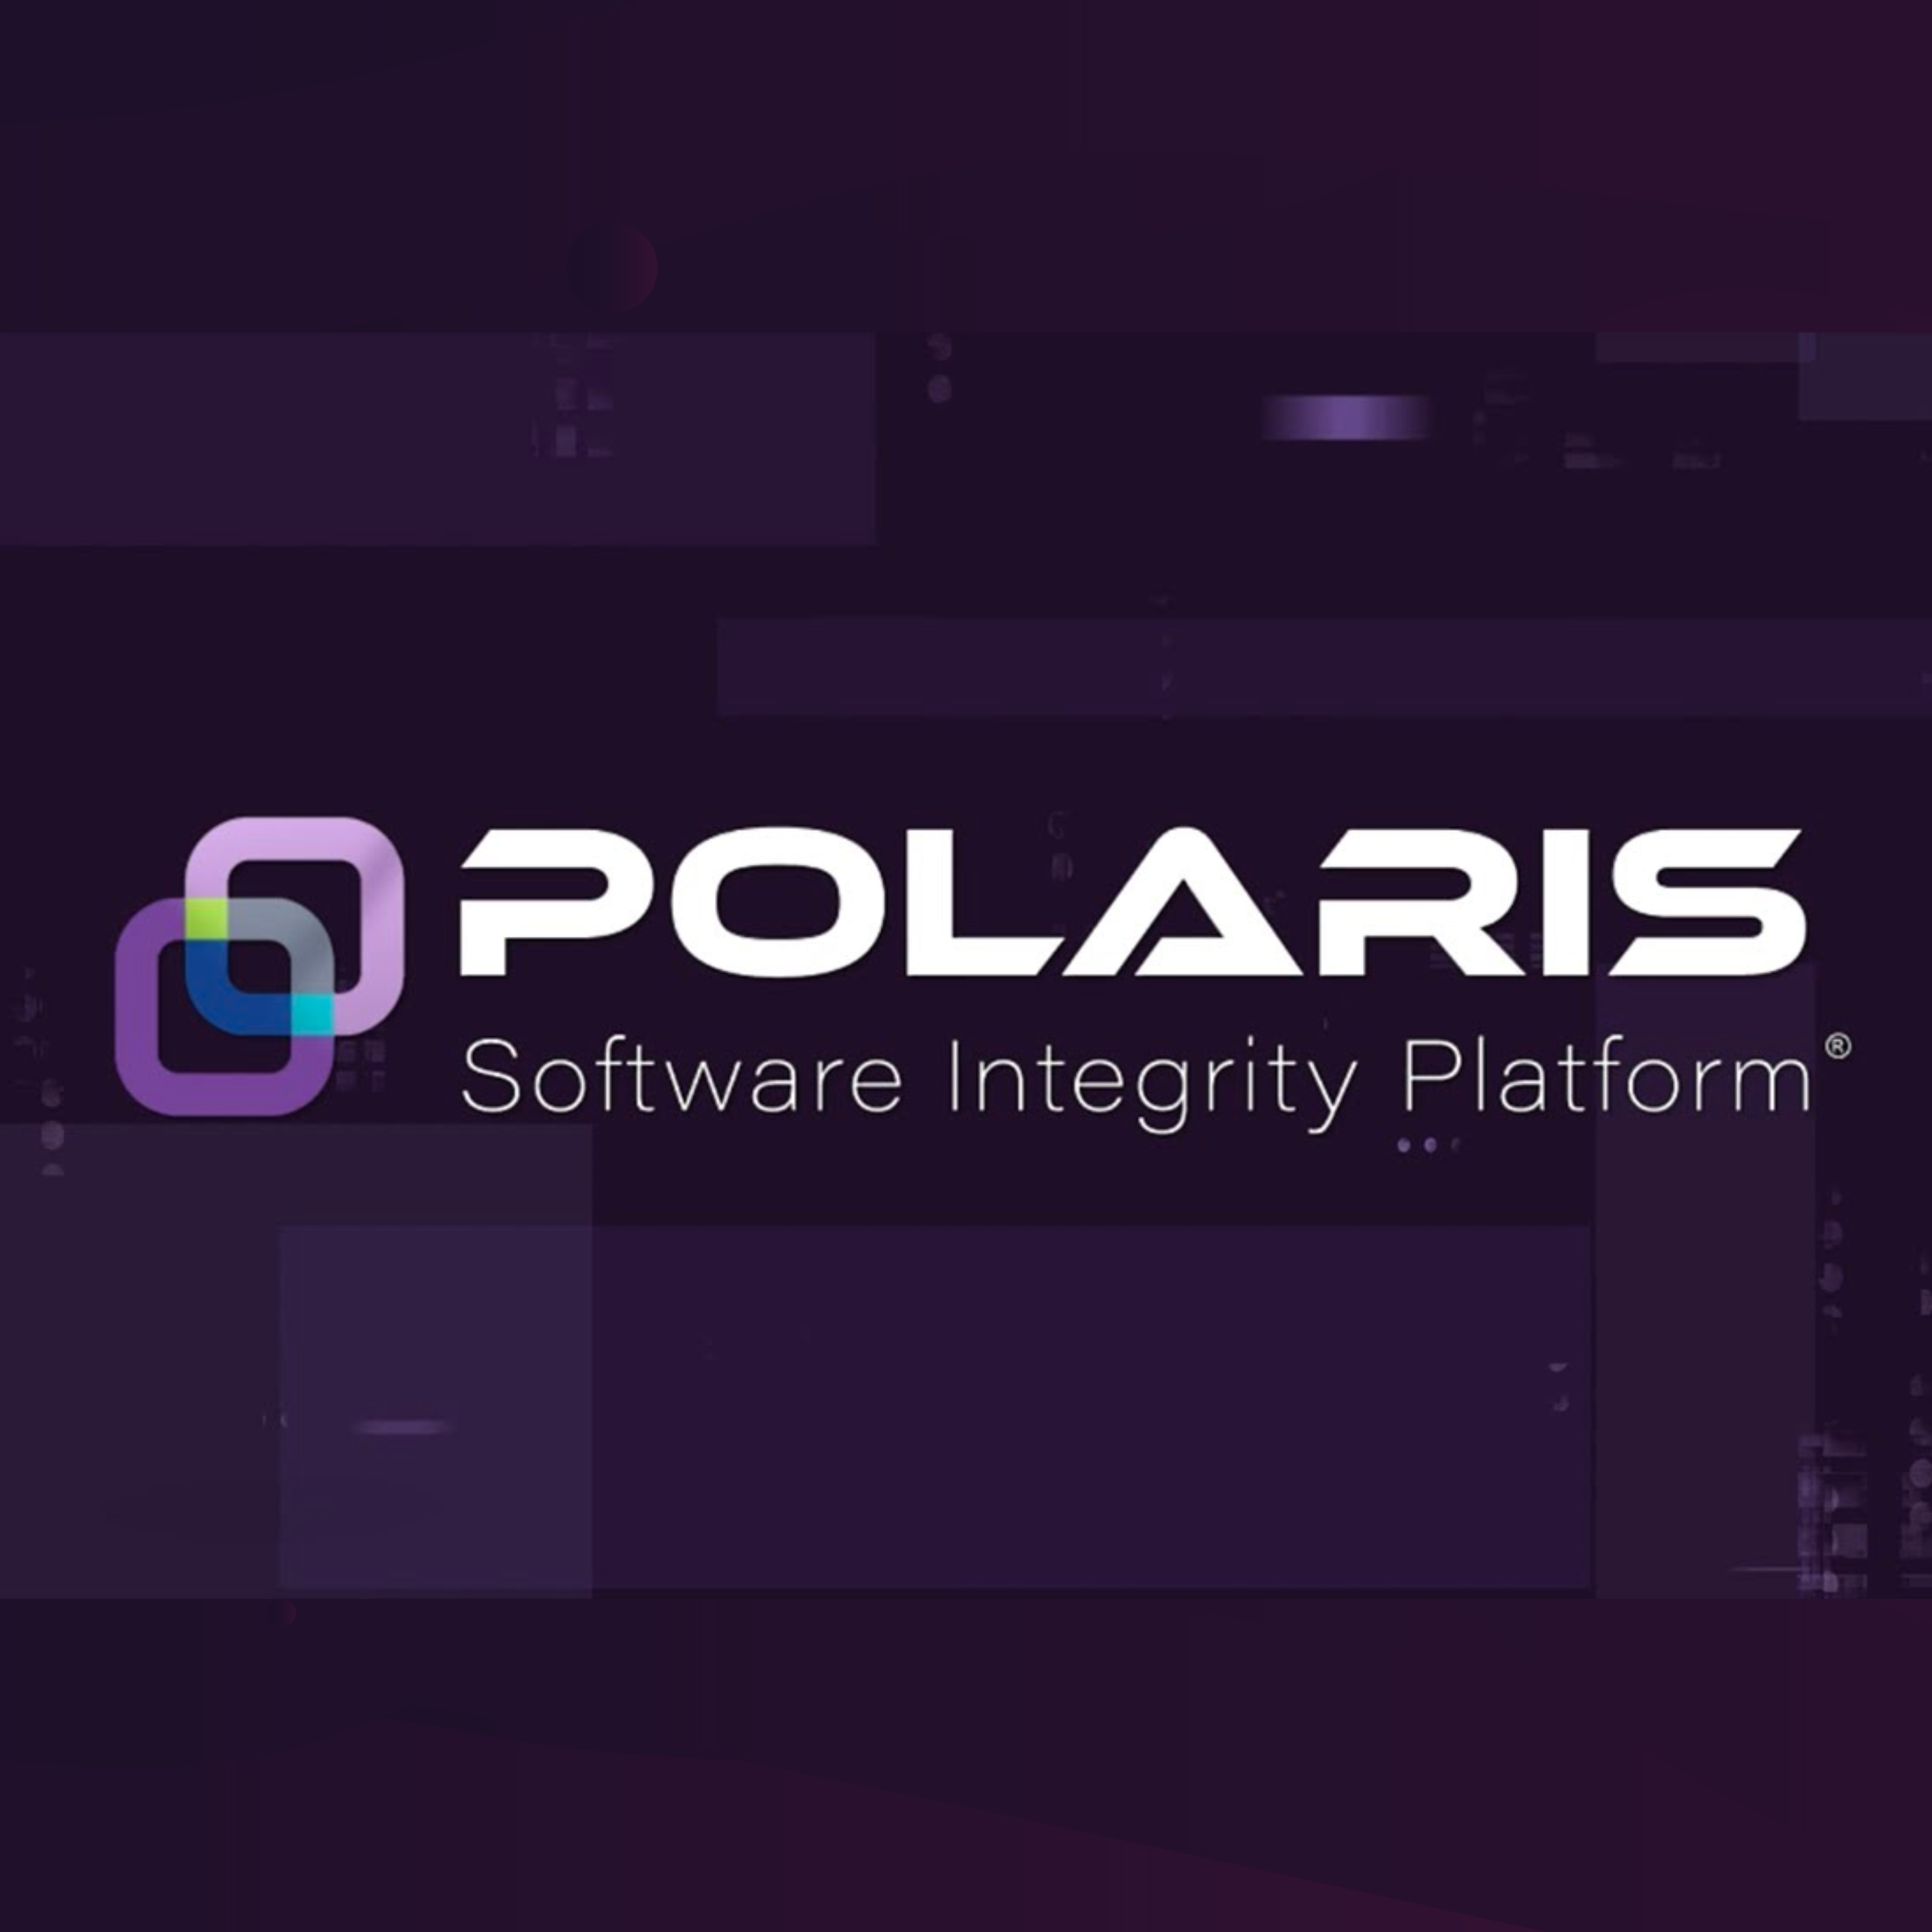 polaris software integrity platform